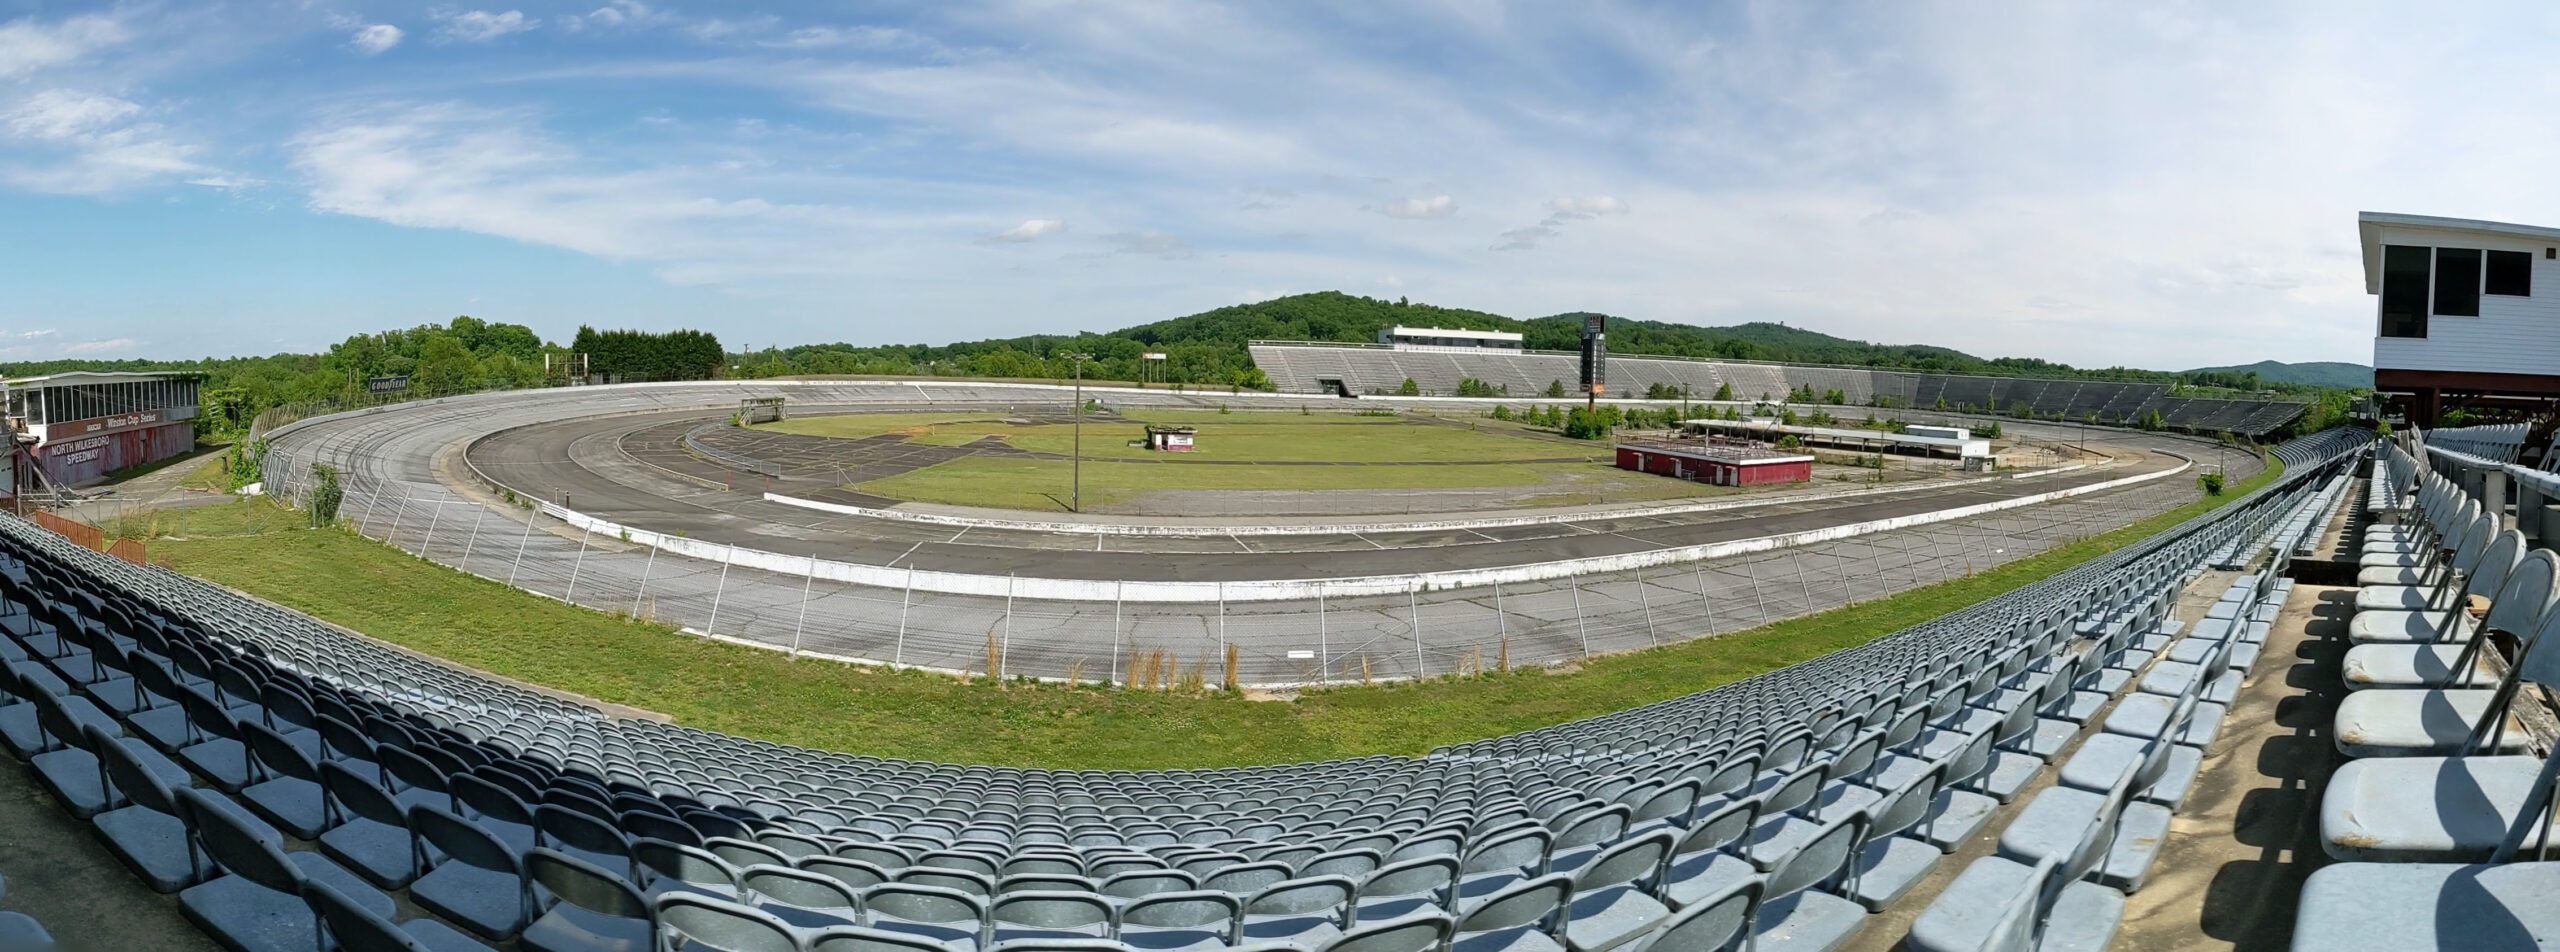 North Wilkesboro Speedway to host 2023 NASCAR AllStar Race The North